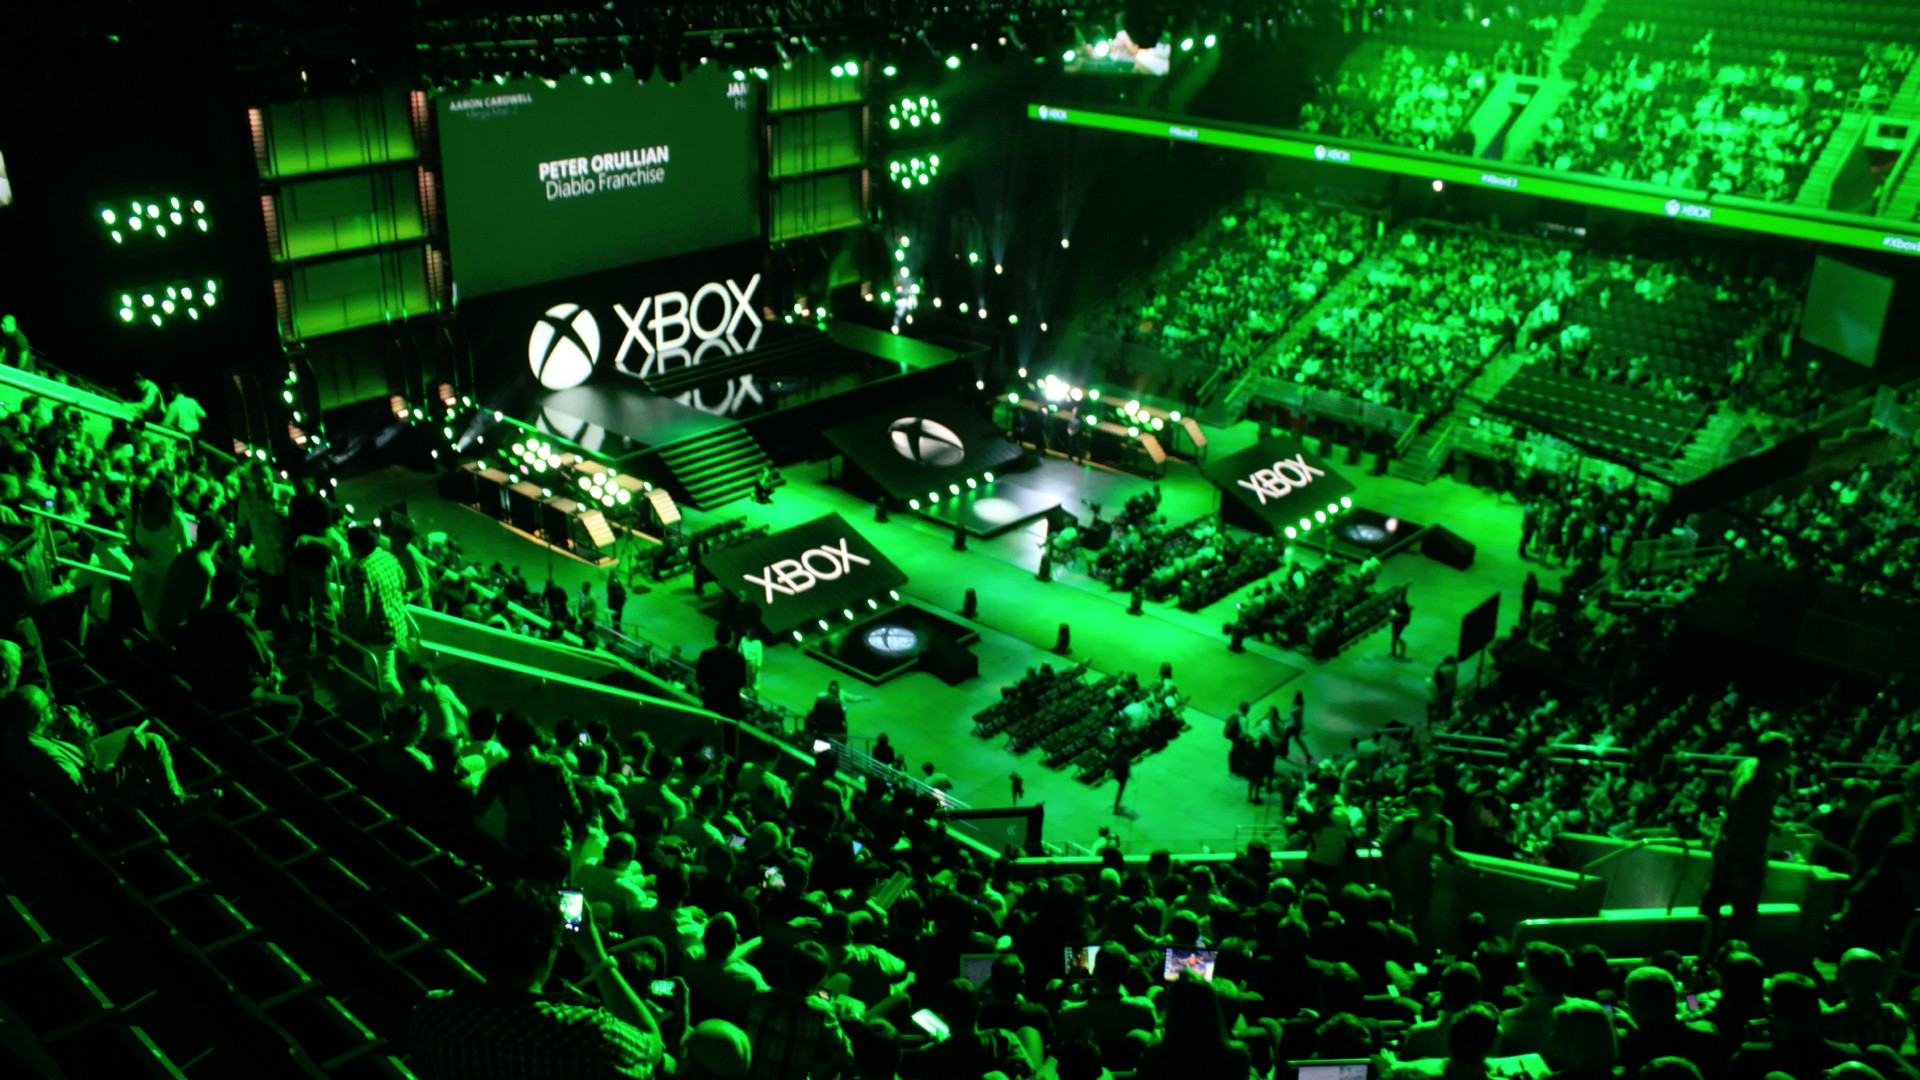 Assista ao vivo a conferência da Microsoft na E3 2015